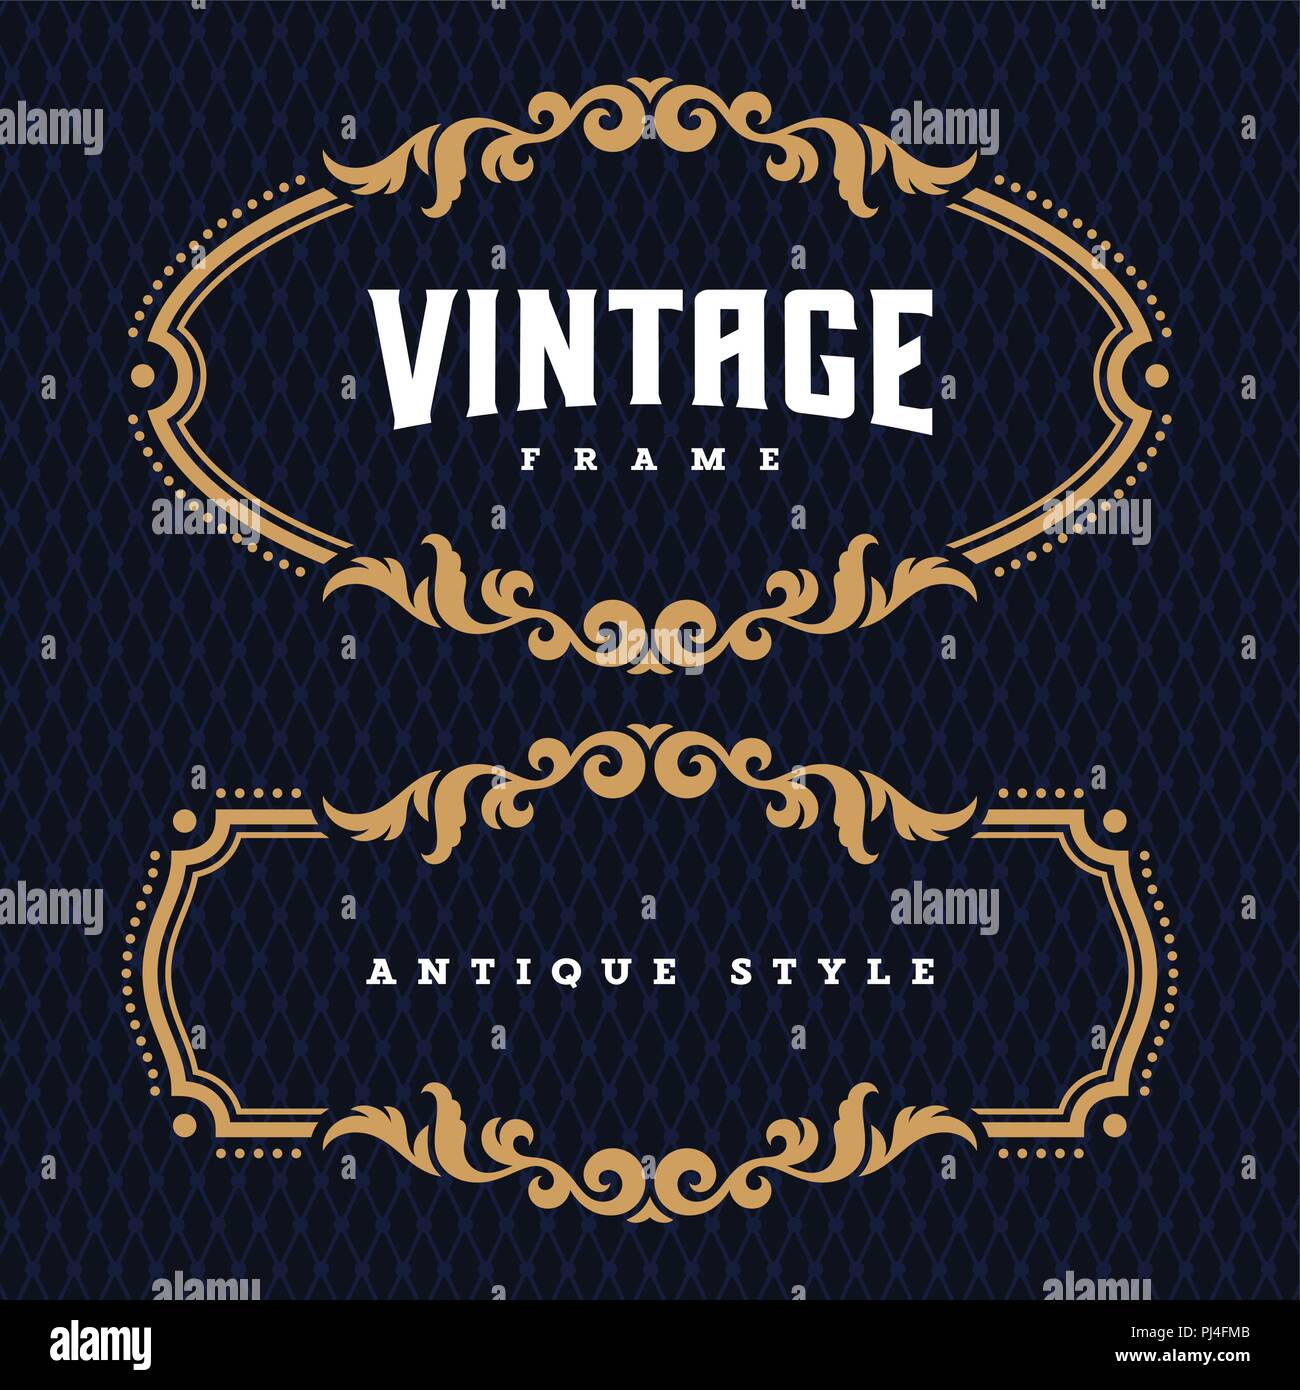 Vintage antique frames / Decorative design elements / Vector / Greeting or invitation card template Stock Vector